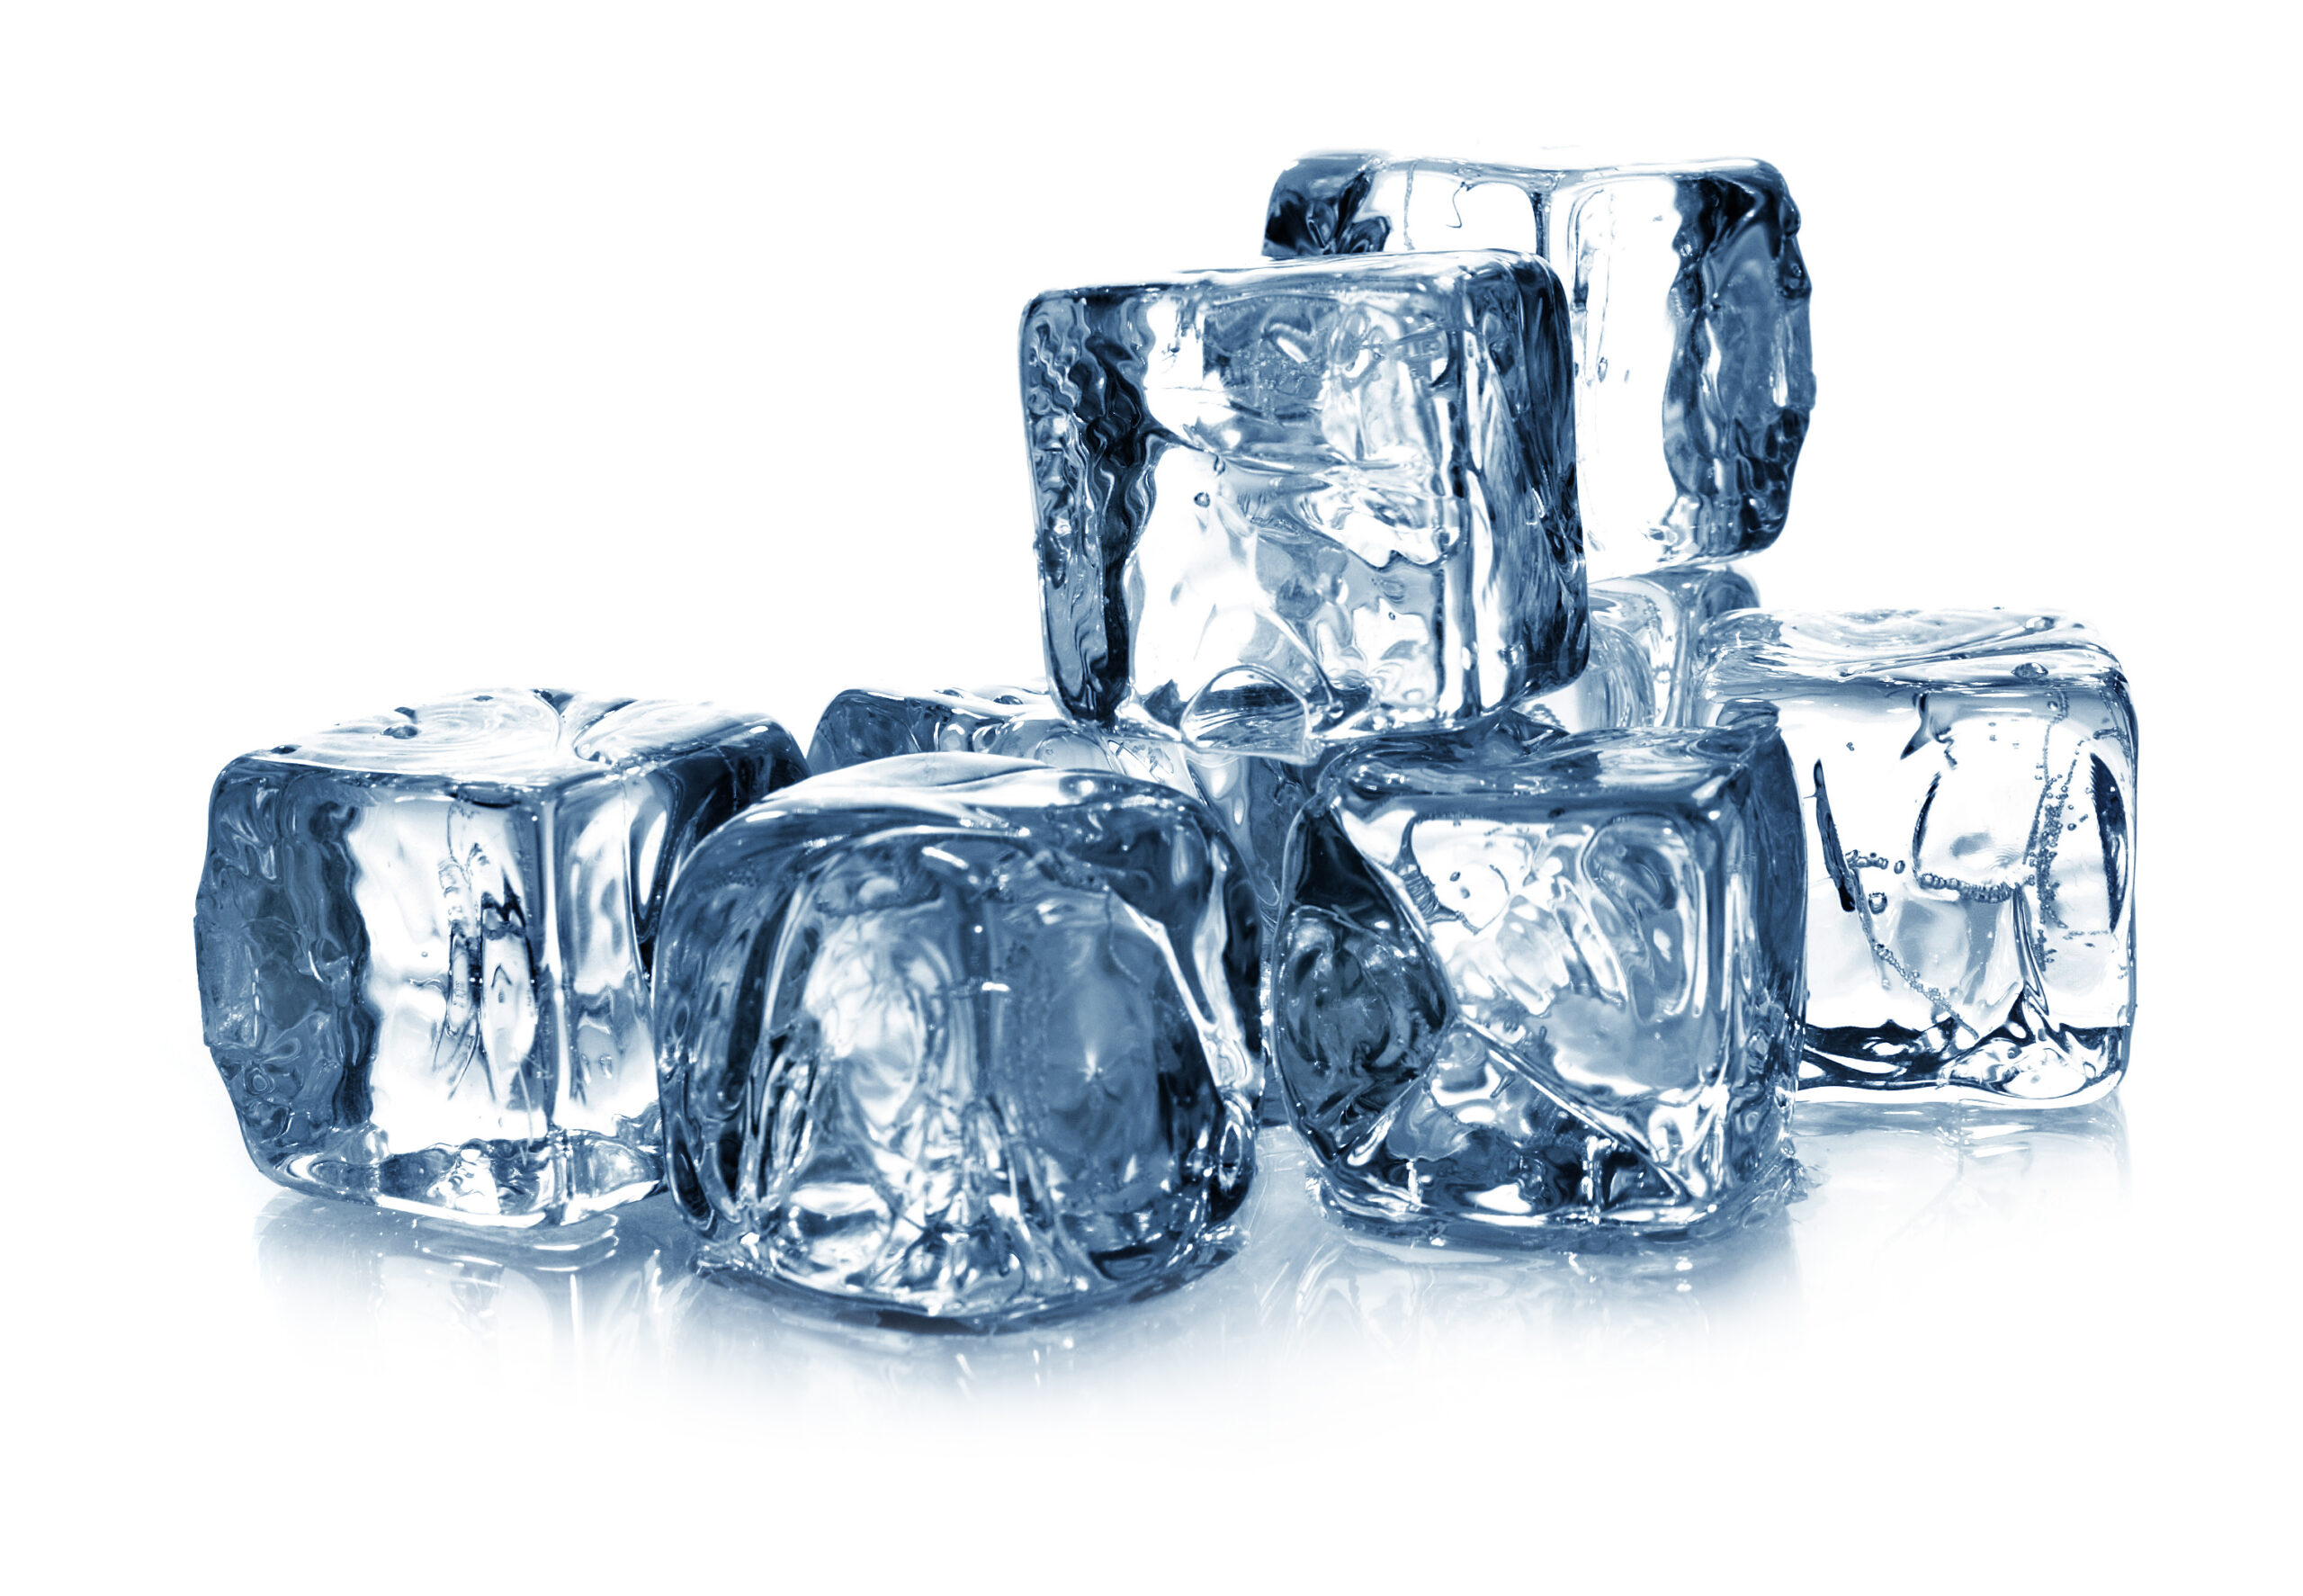 Blue ice cubes